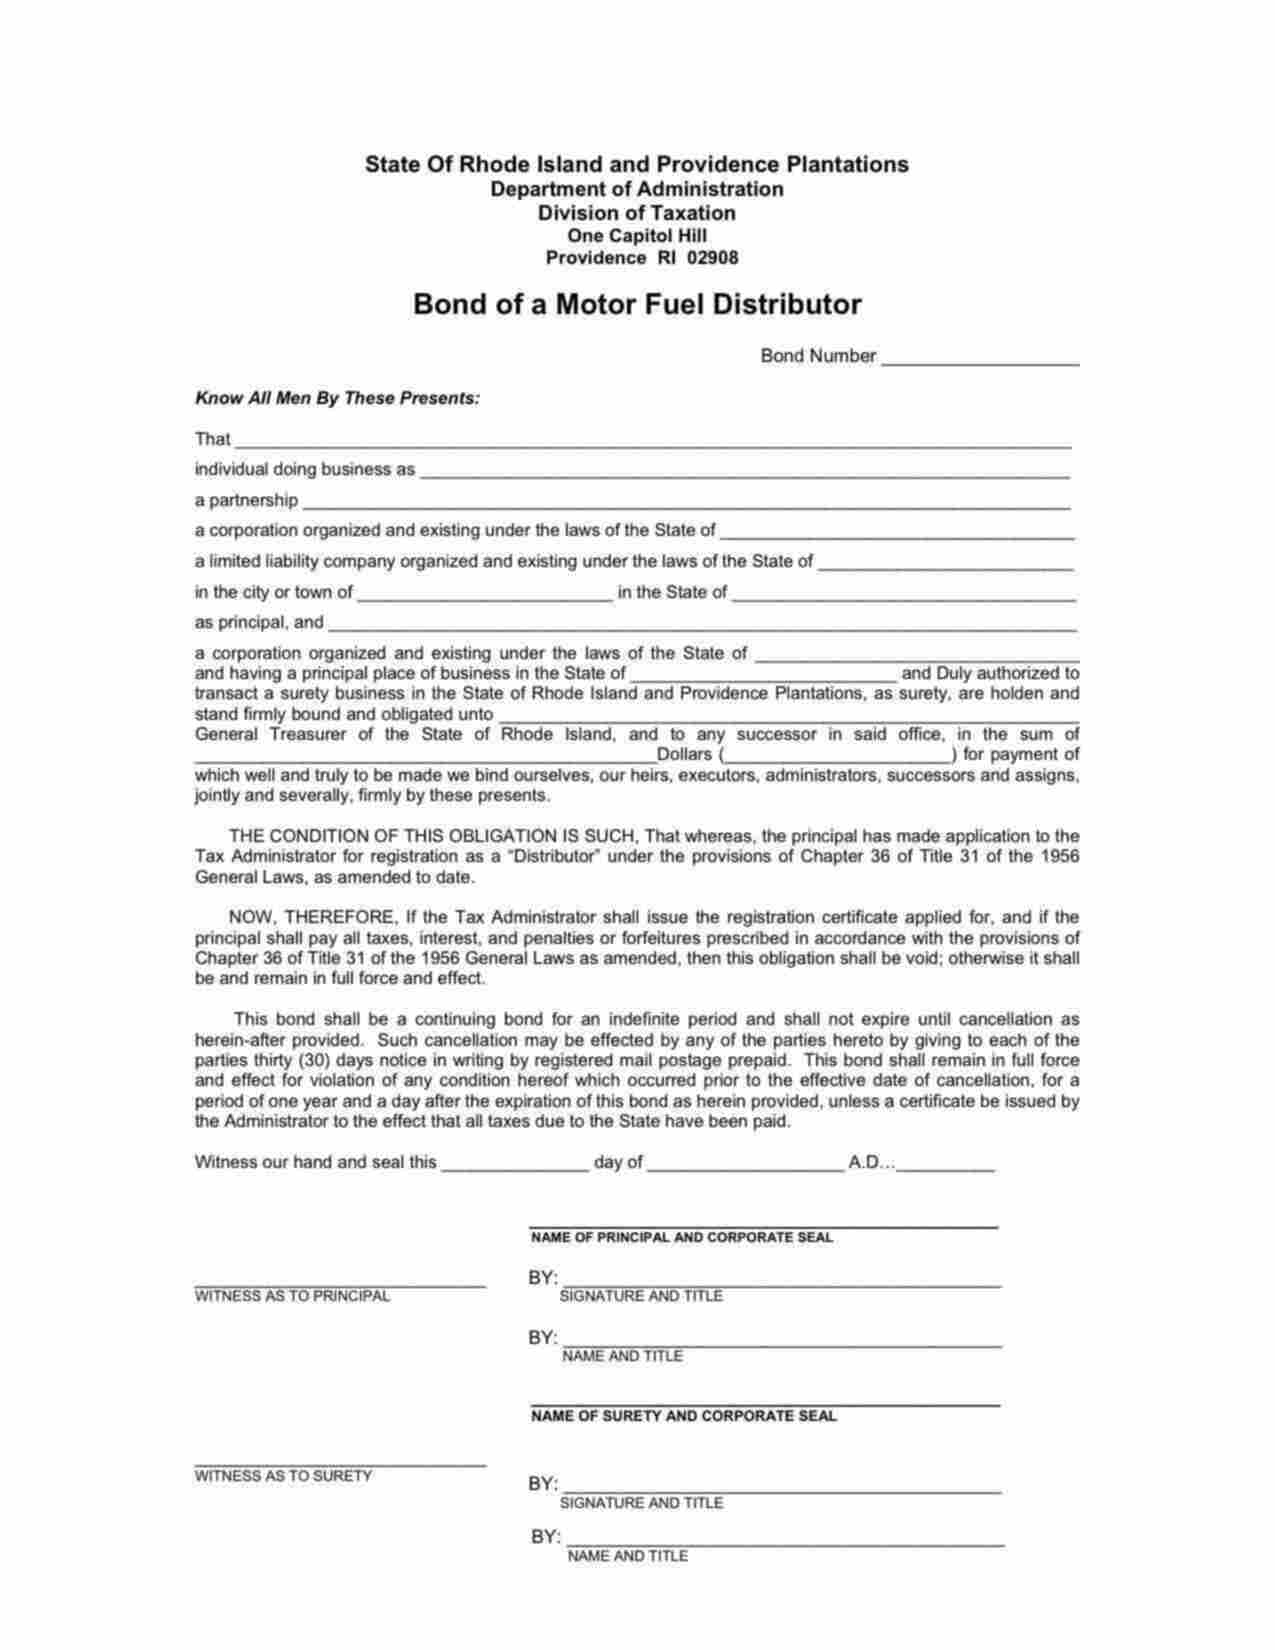 Rhode Island Motor Fuel Distributor - Partnership Bond Form